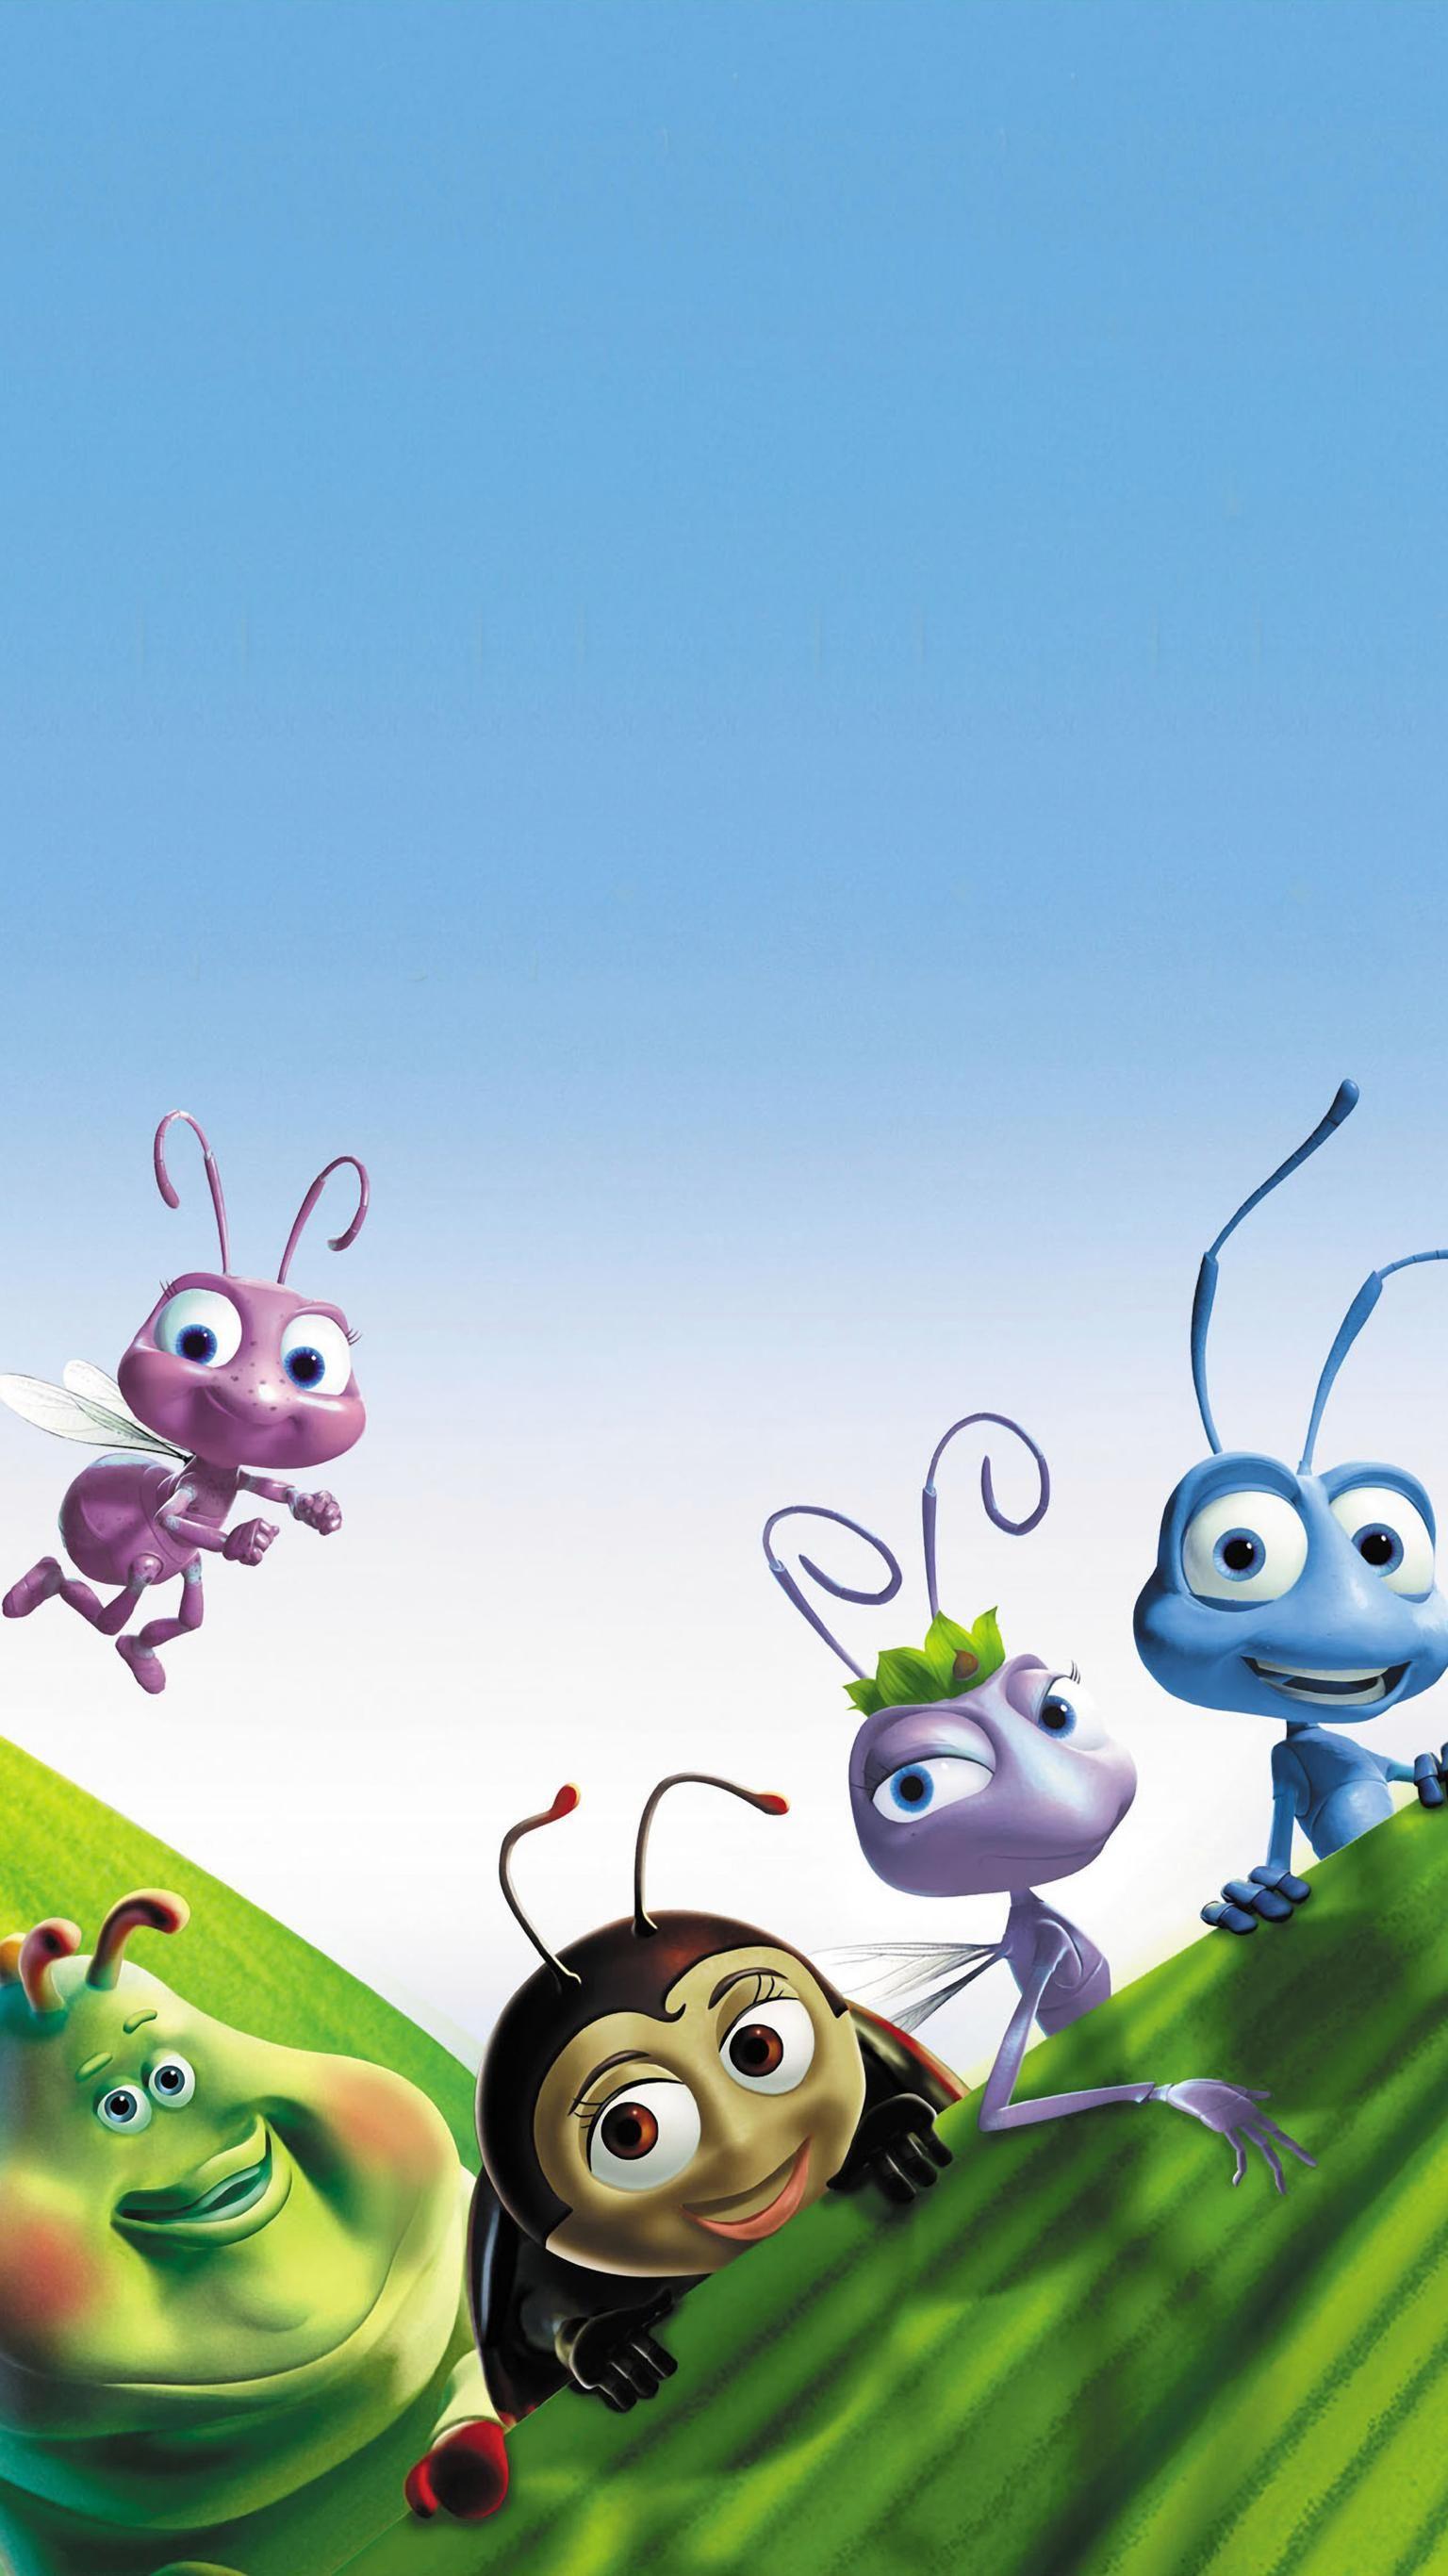 A Bug's Life (1998) Phone Wallpaper. Disney. A bug's life